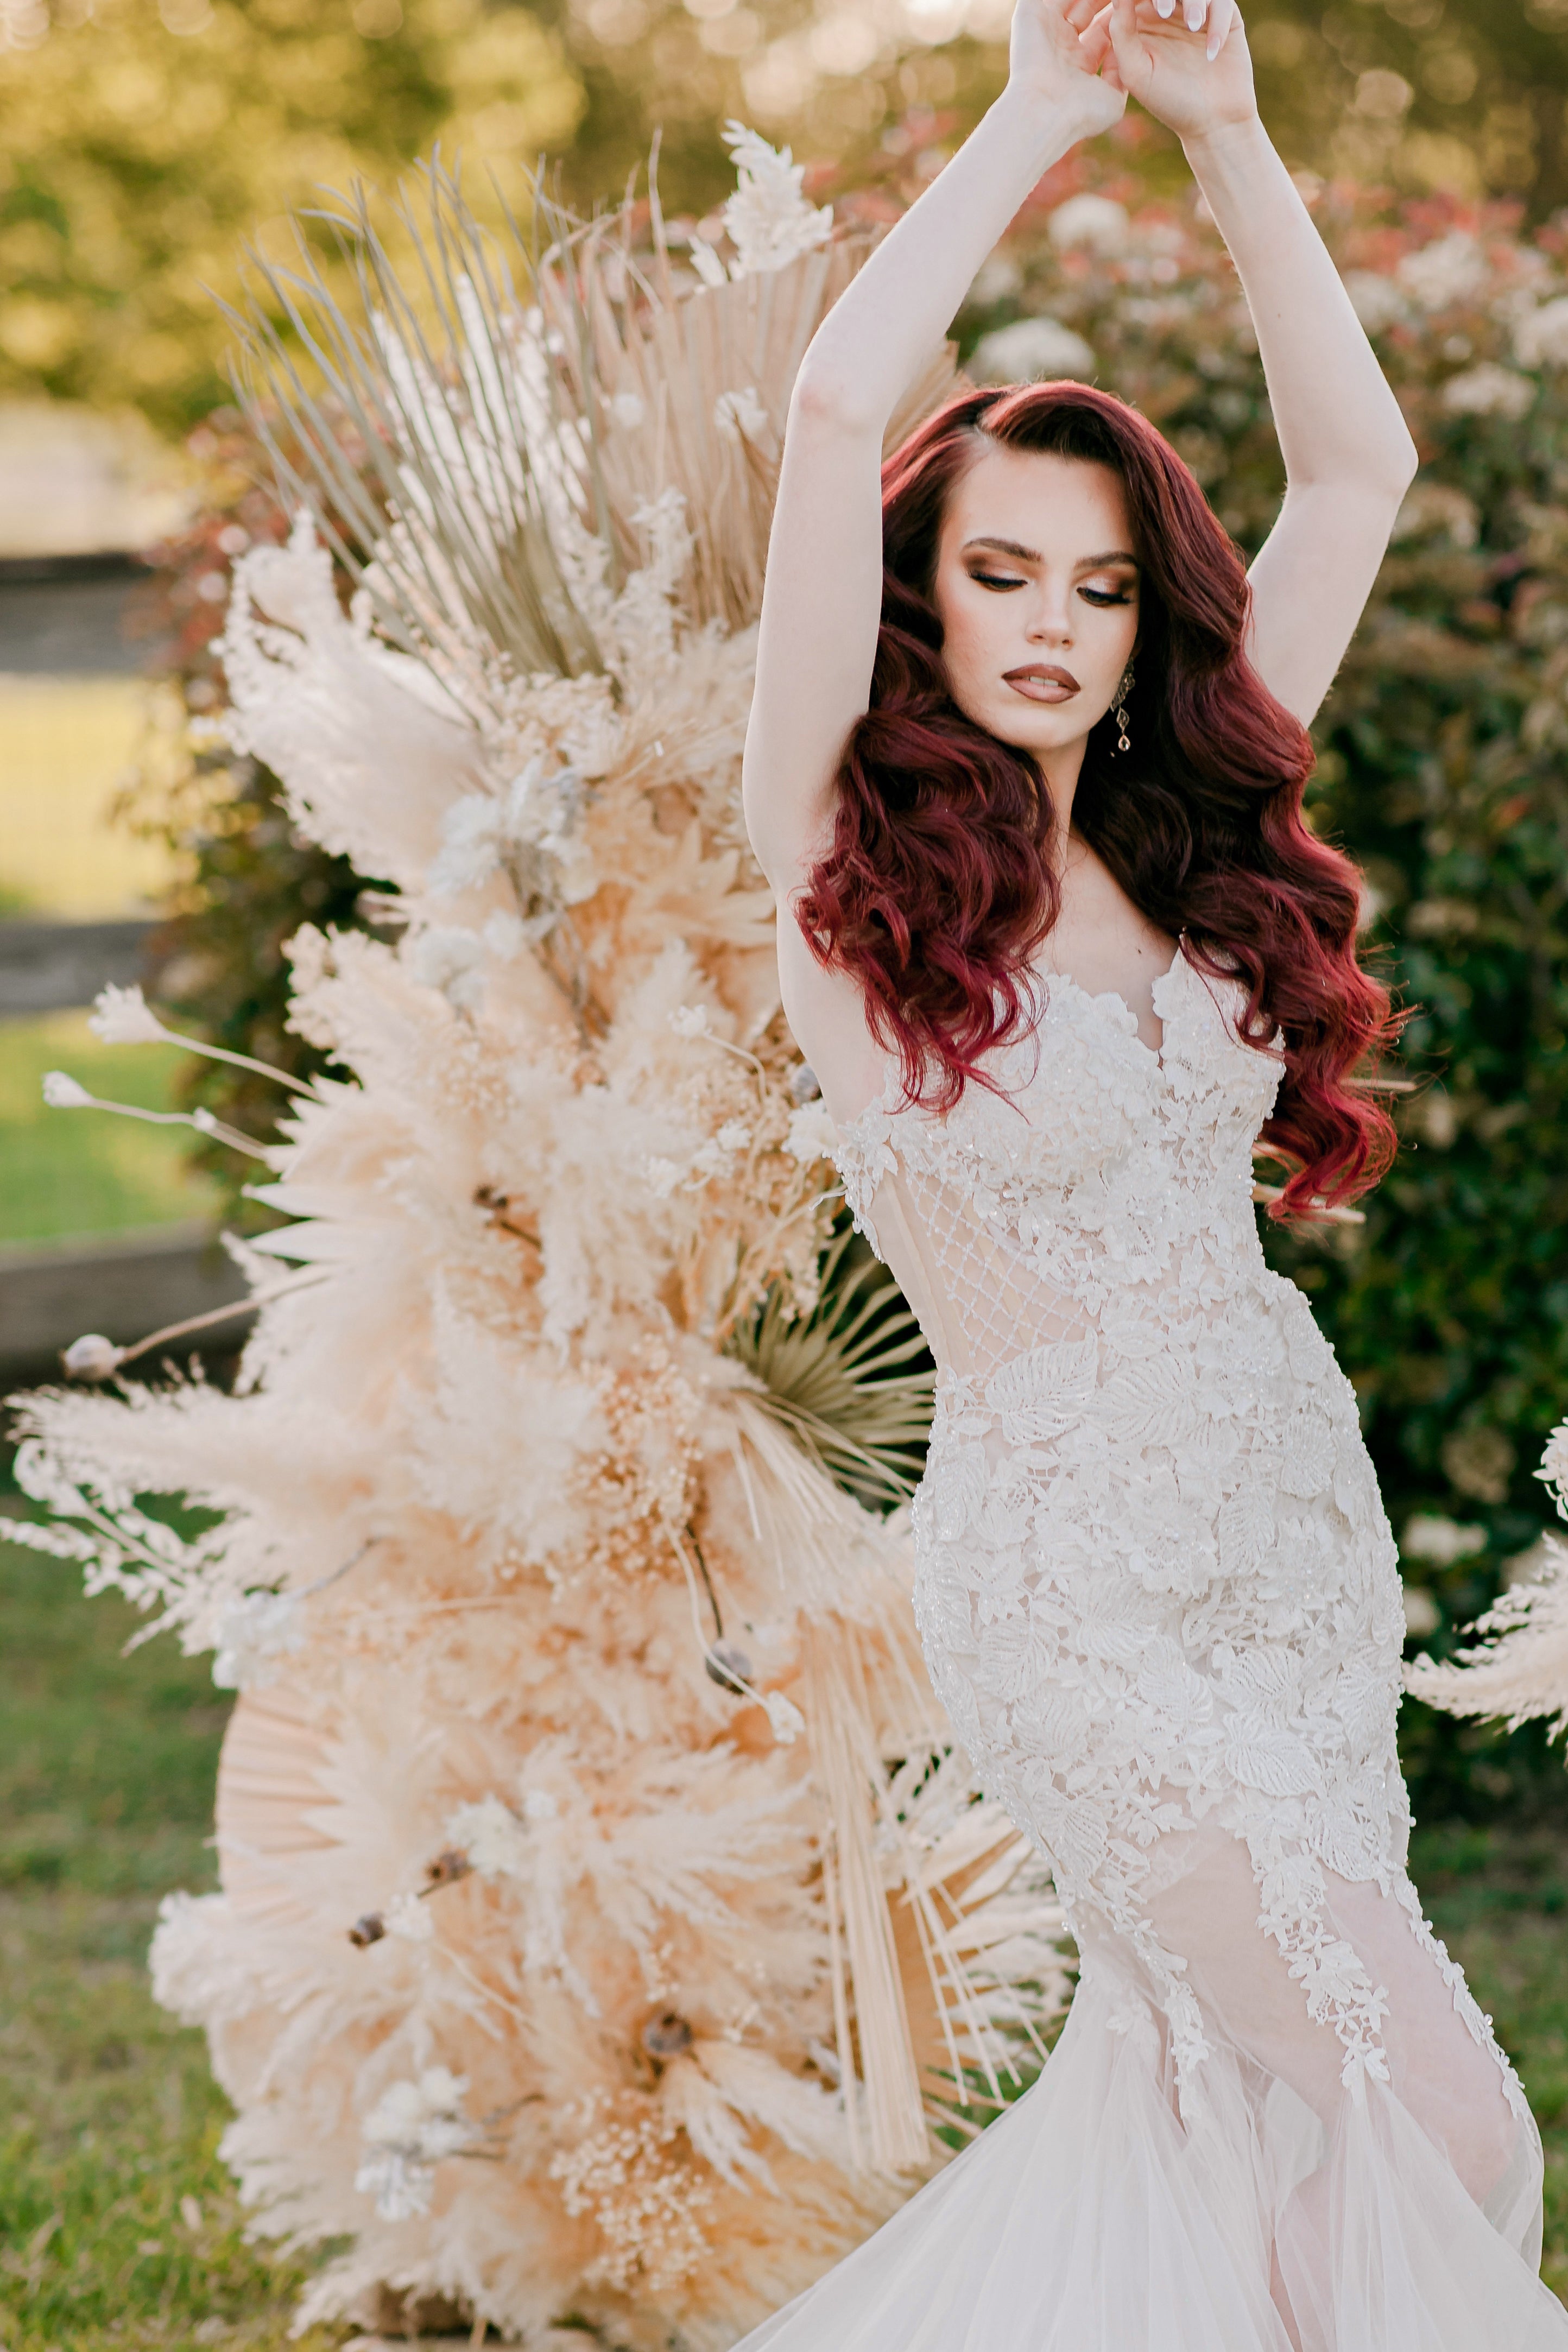 Lace and Tulle Mermaid Wedding Dress (#Julieta)